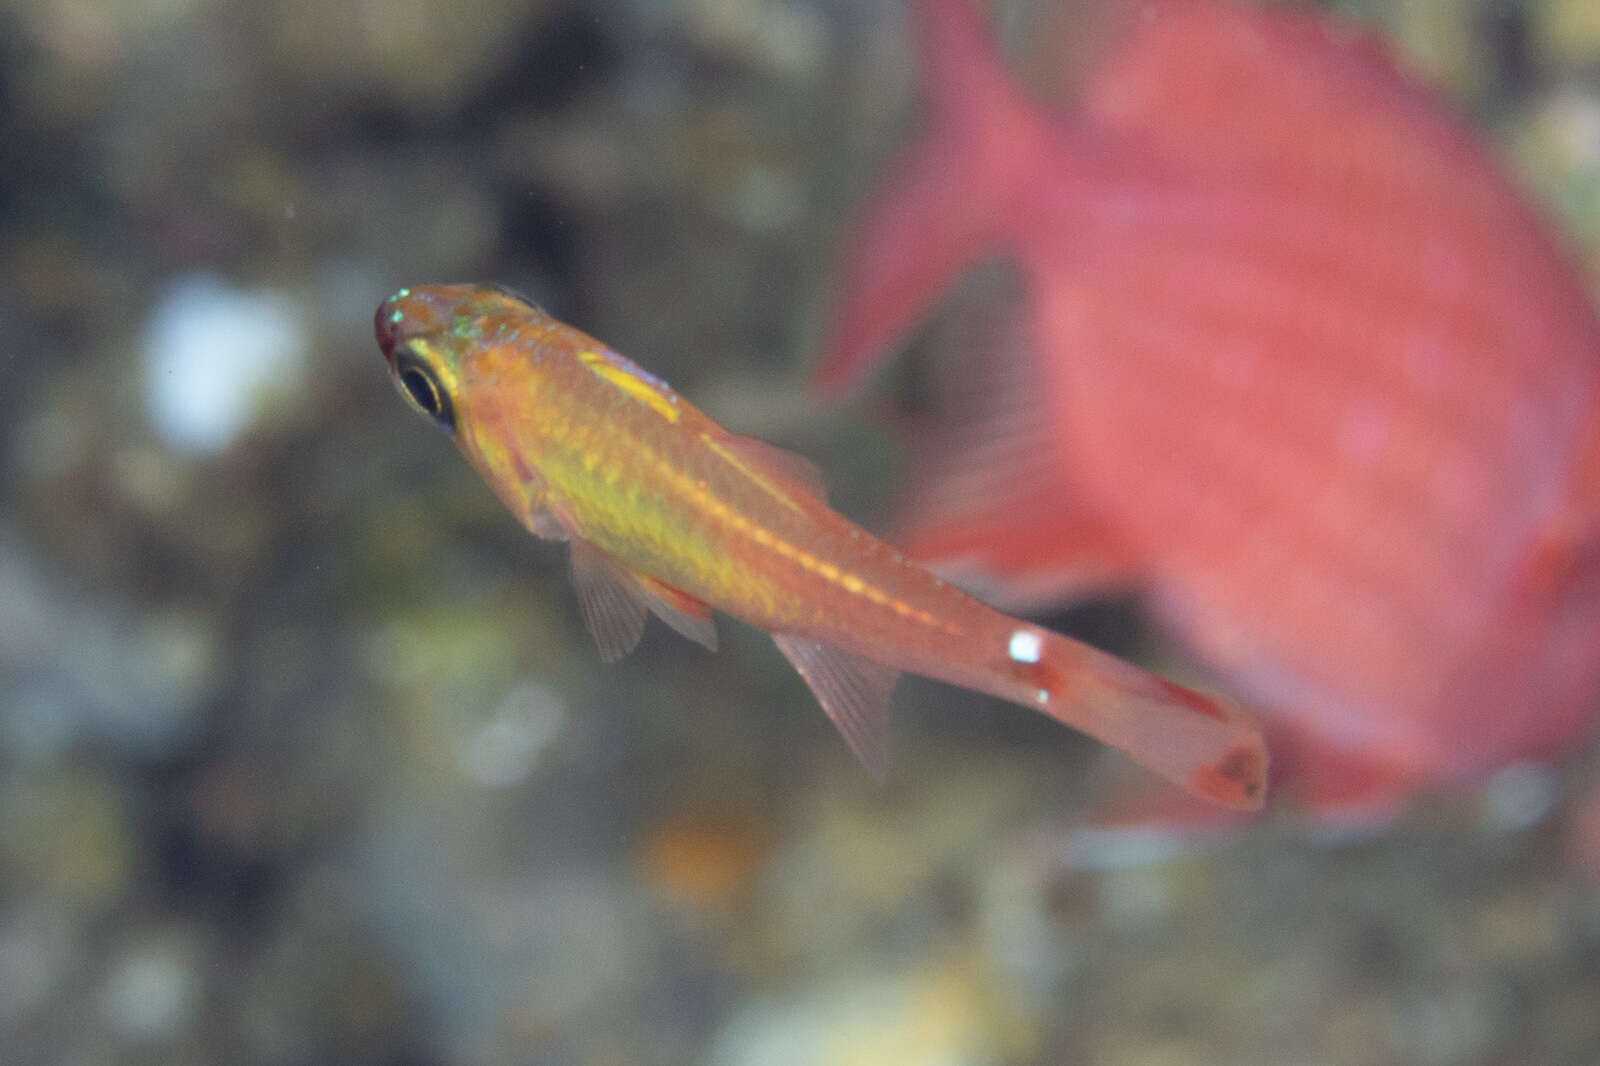 Image of Redspot cardinalfish